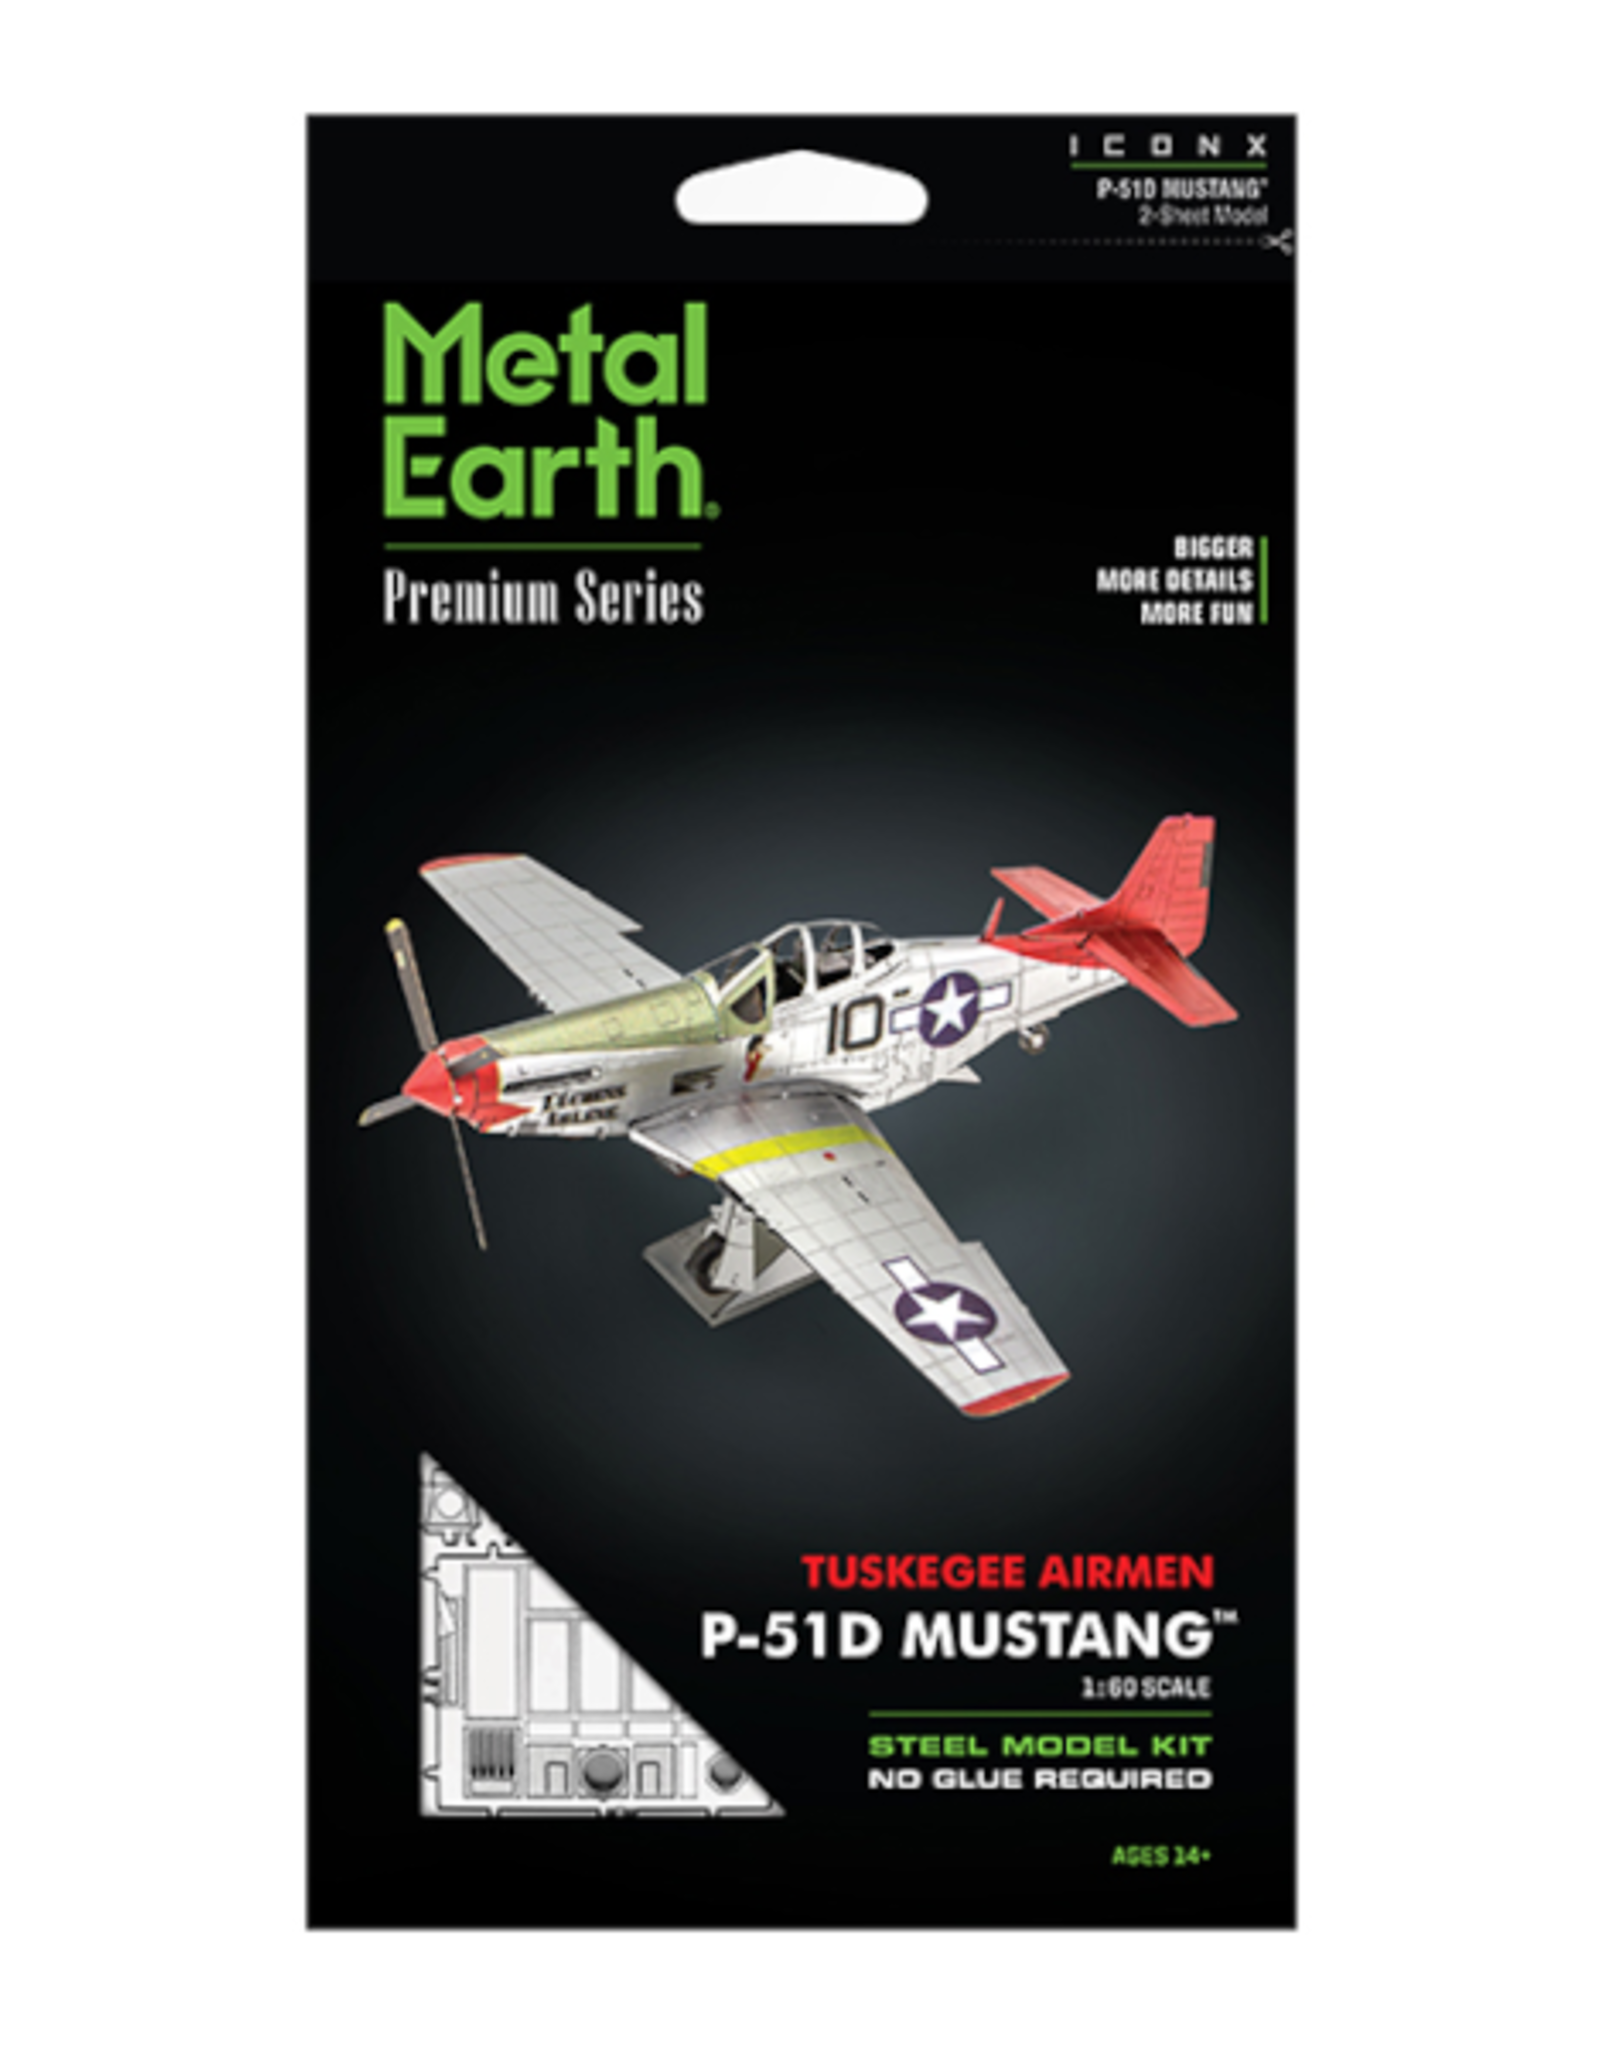 Metal Earth Metal Earth - Iconx - Tuskegee Airmen P-51D Mustang